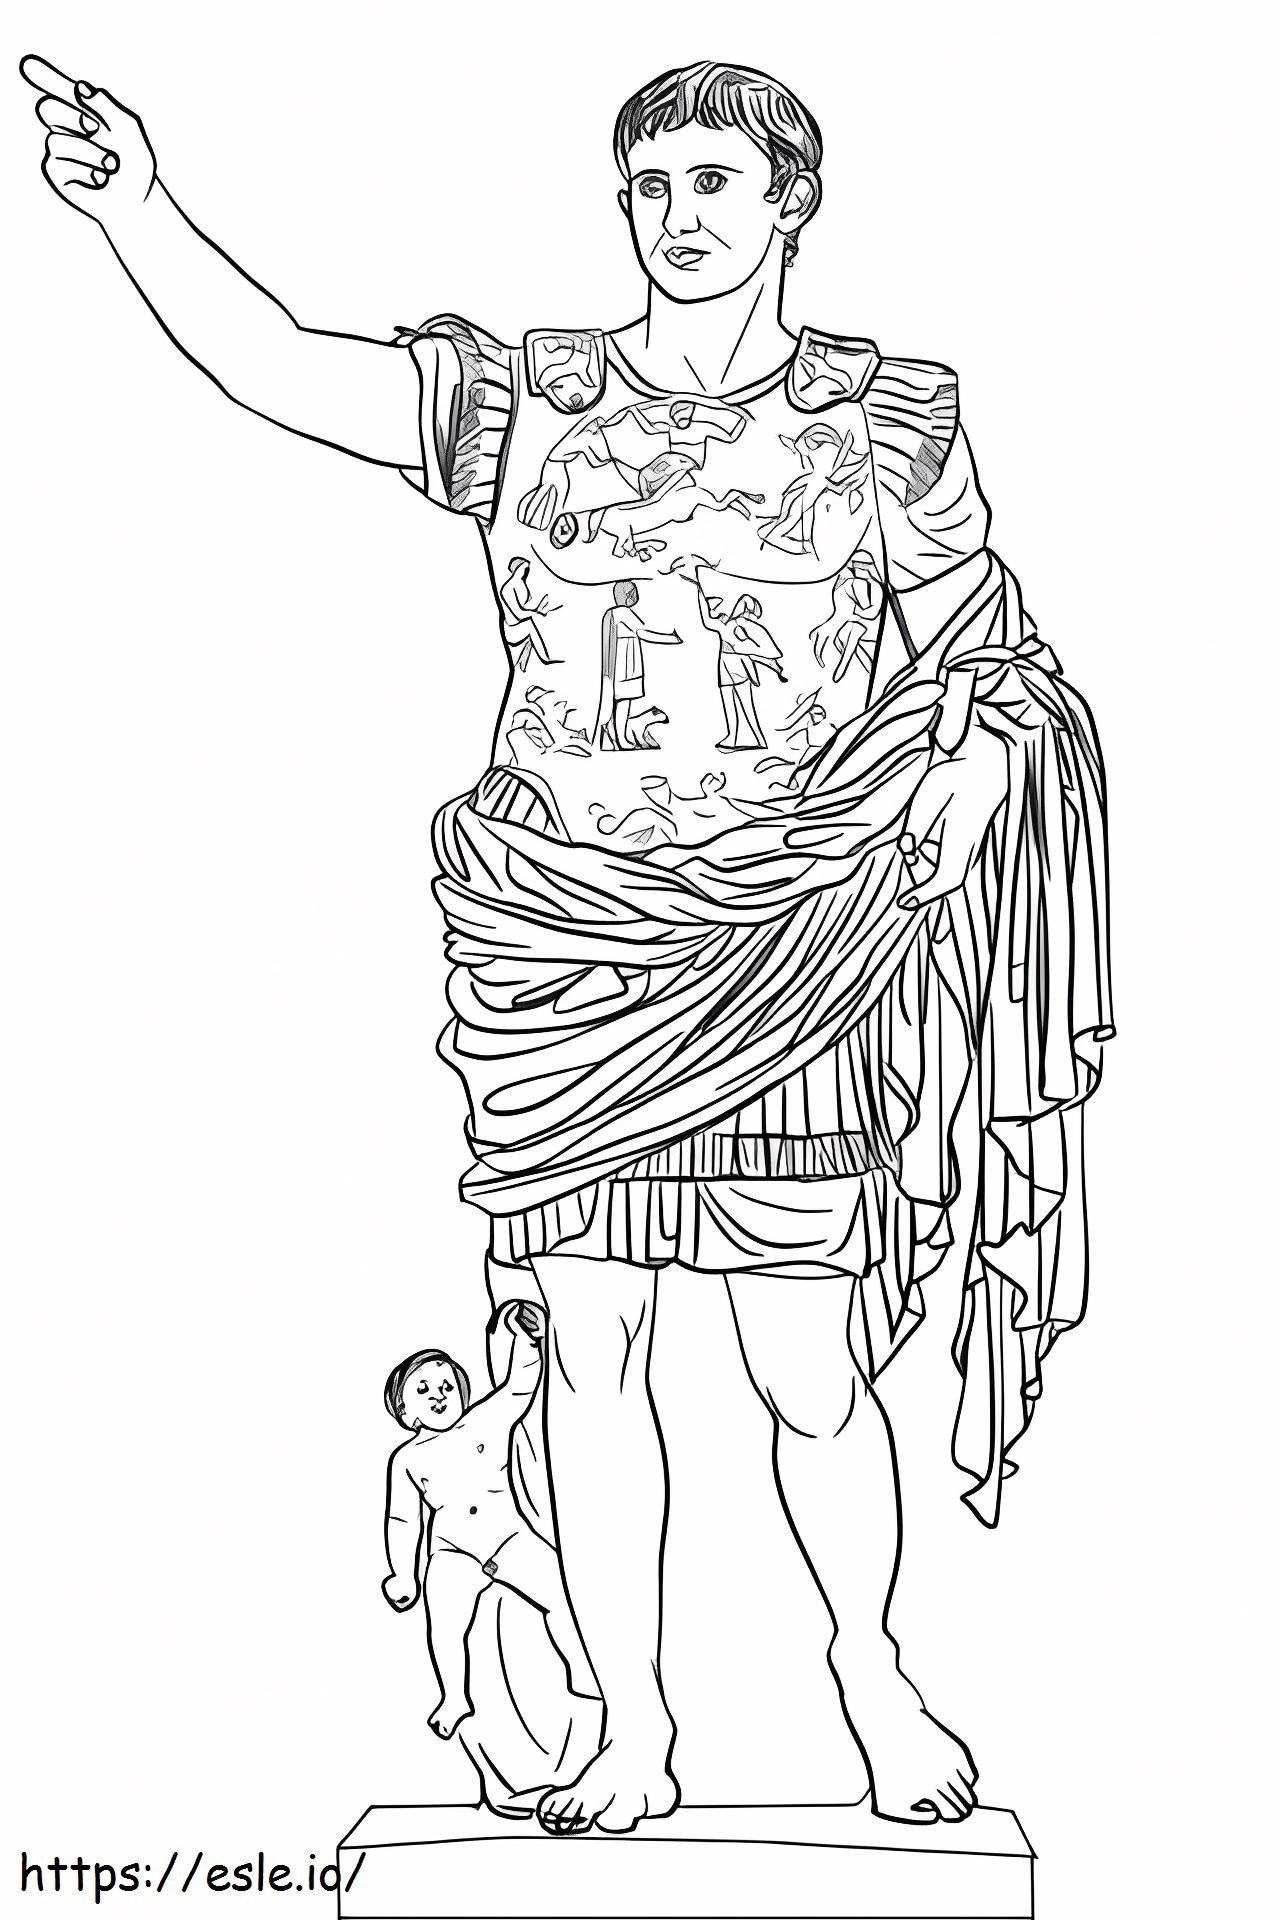 Estatua de Augusto César para colorear